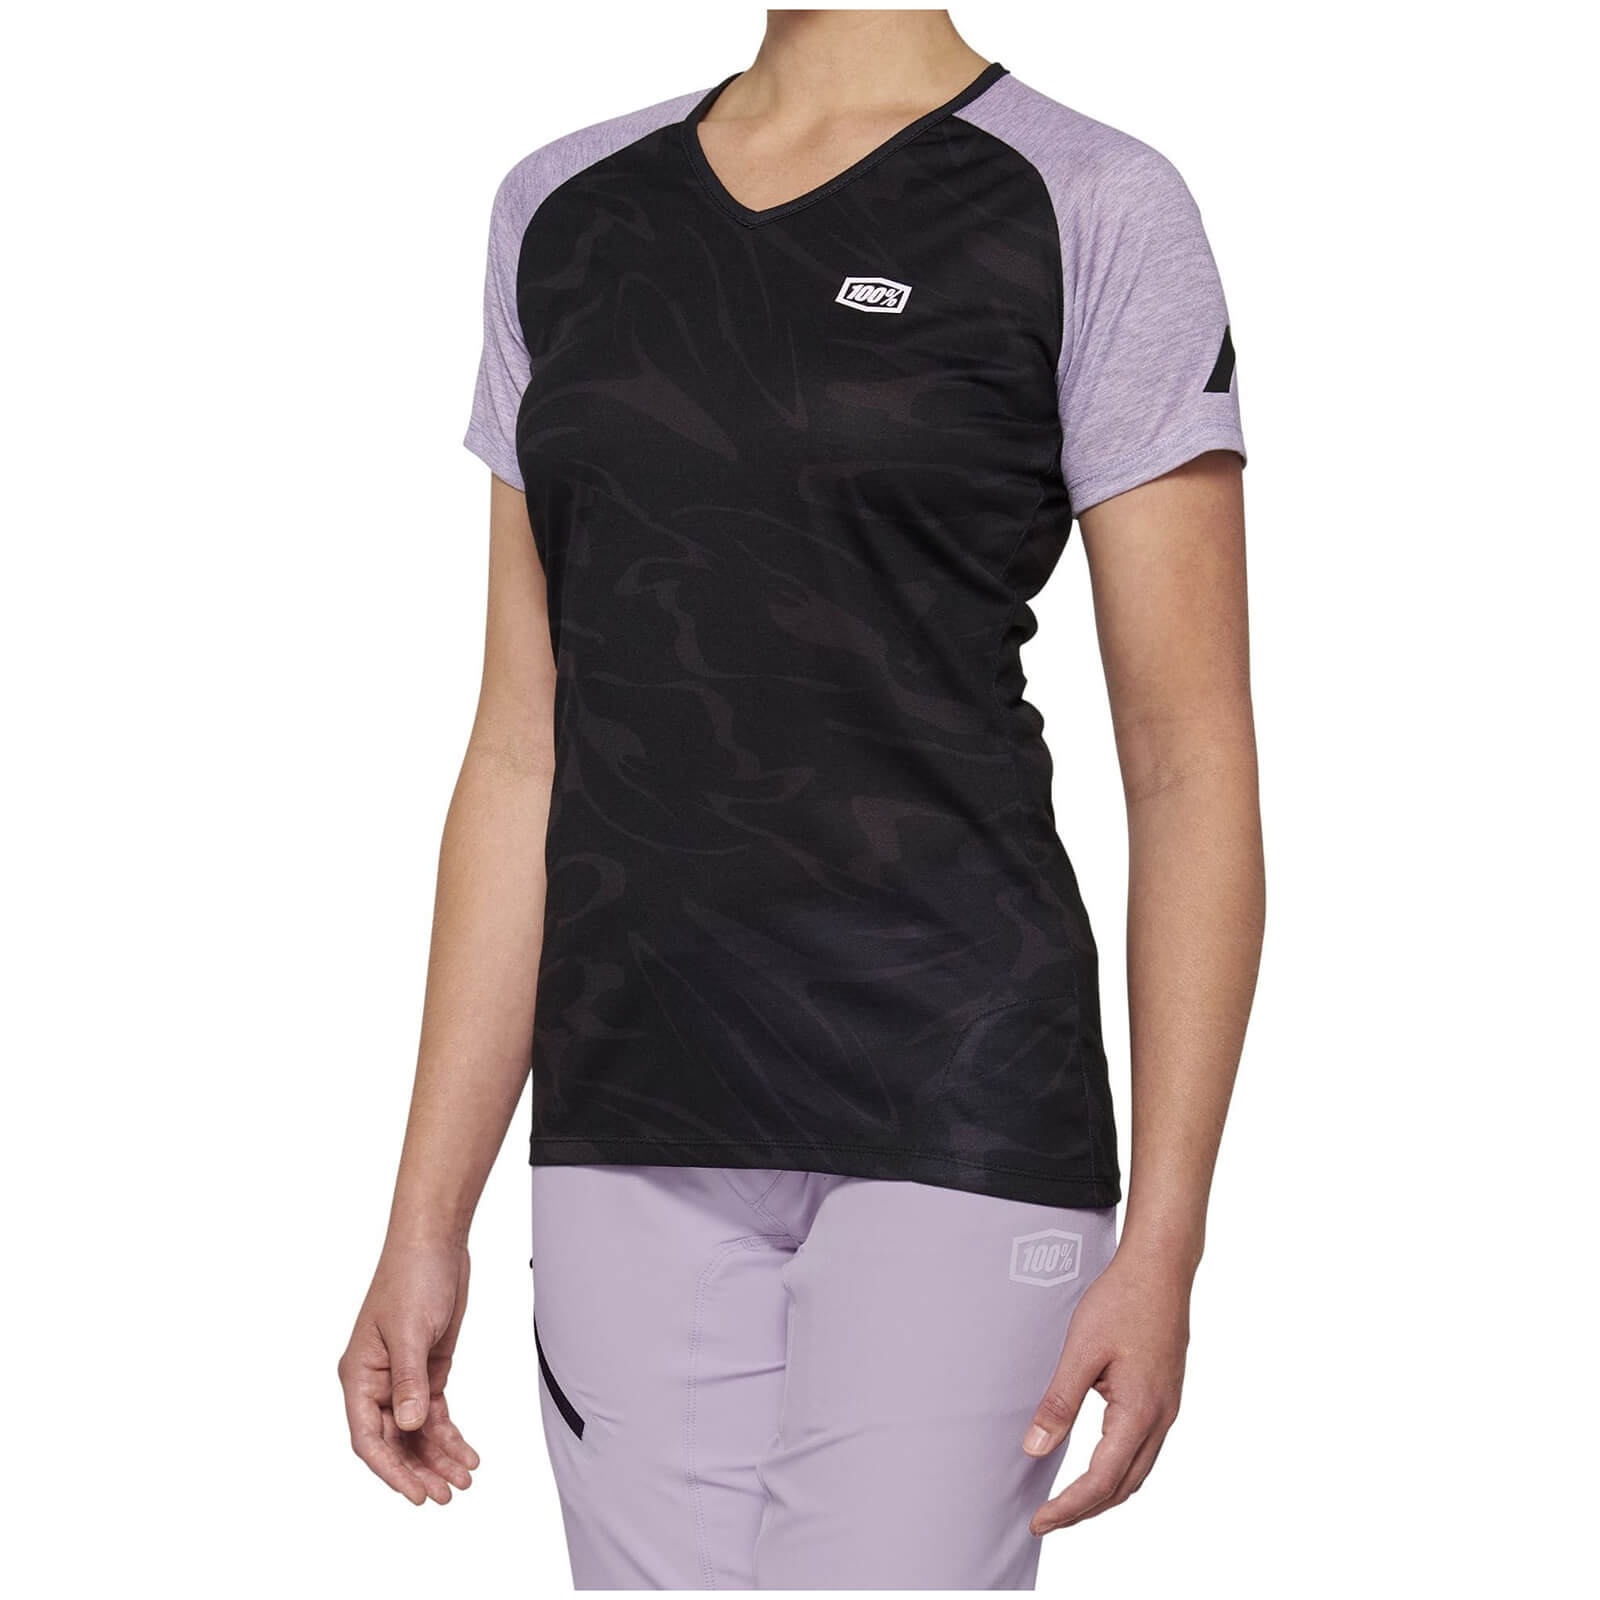 100% Women's Airmatic MTB Jersey - XL - Black/Lavender